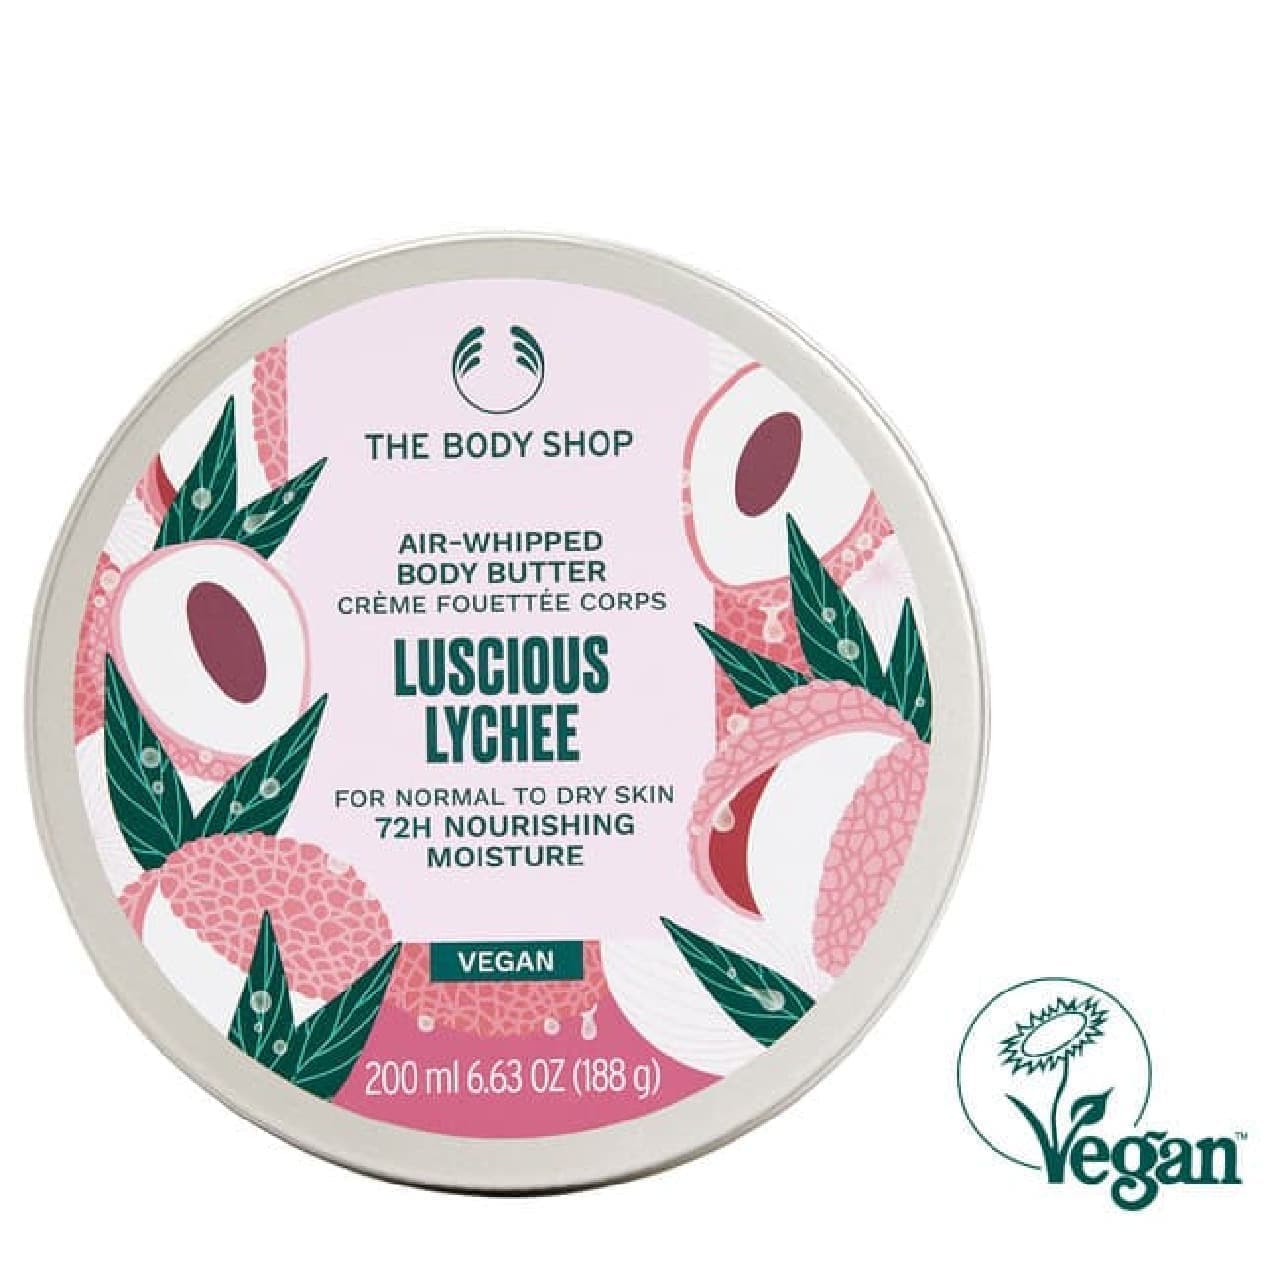 The Body Shop "Zesty LIM Blossom" and "Lucious LYC" summer-oriented body yogurt and shampoo scrub, etc.